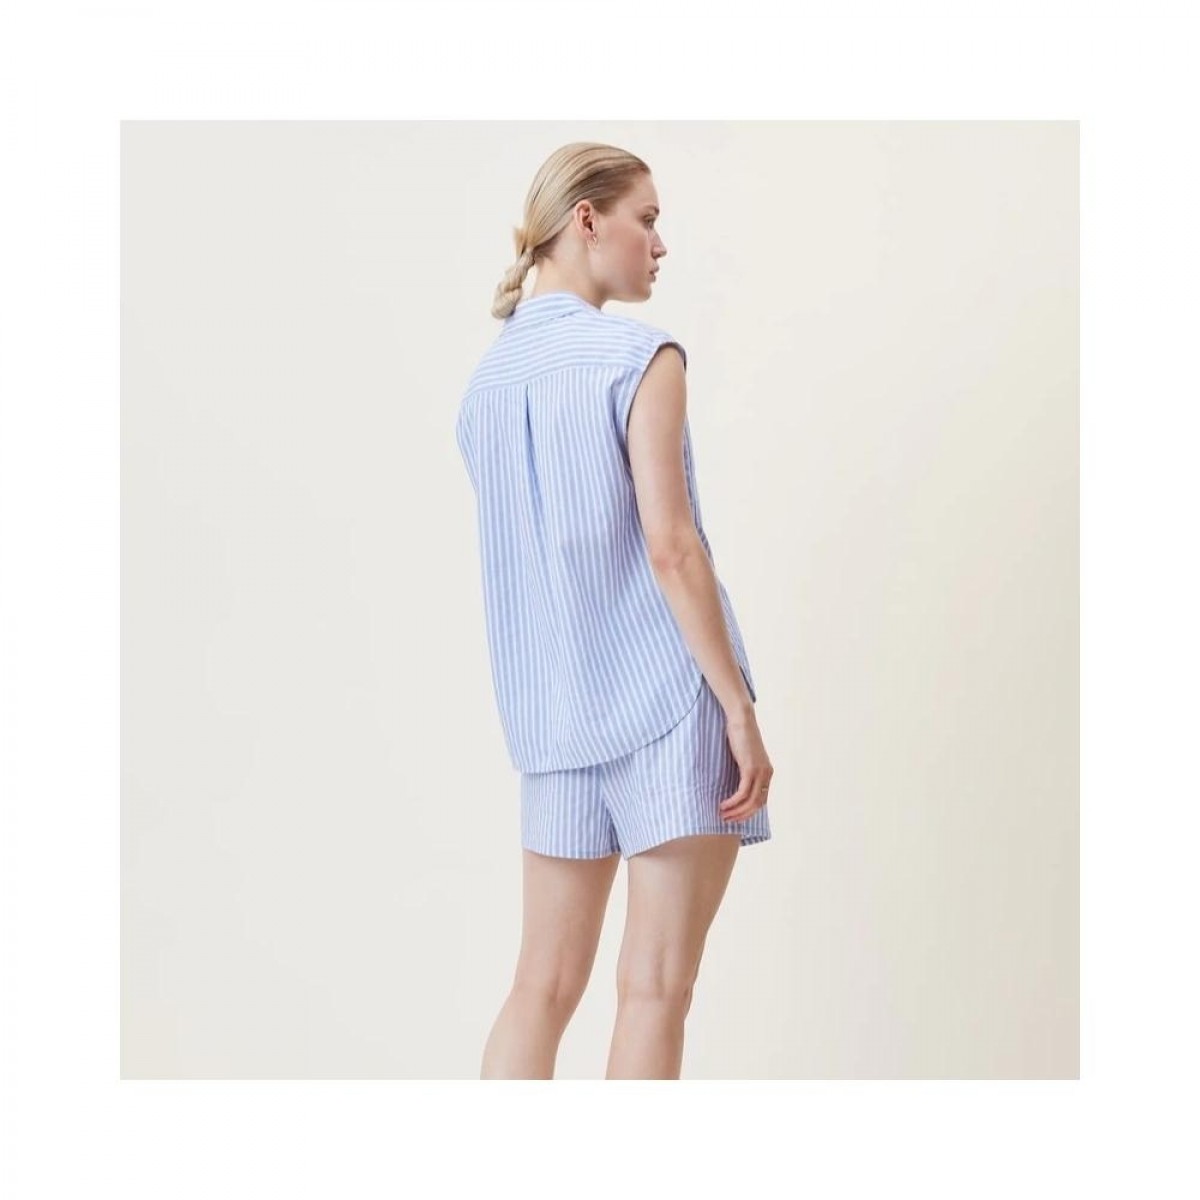 veneda shirt - clear blue - model ryg